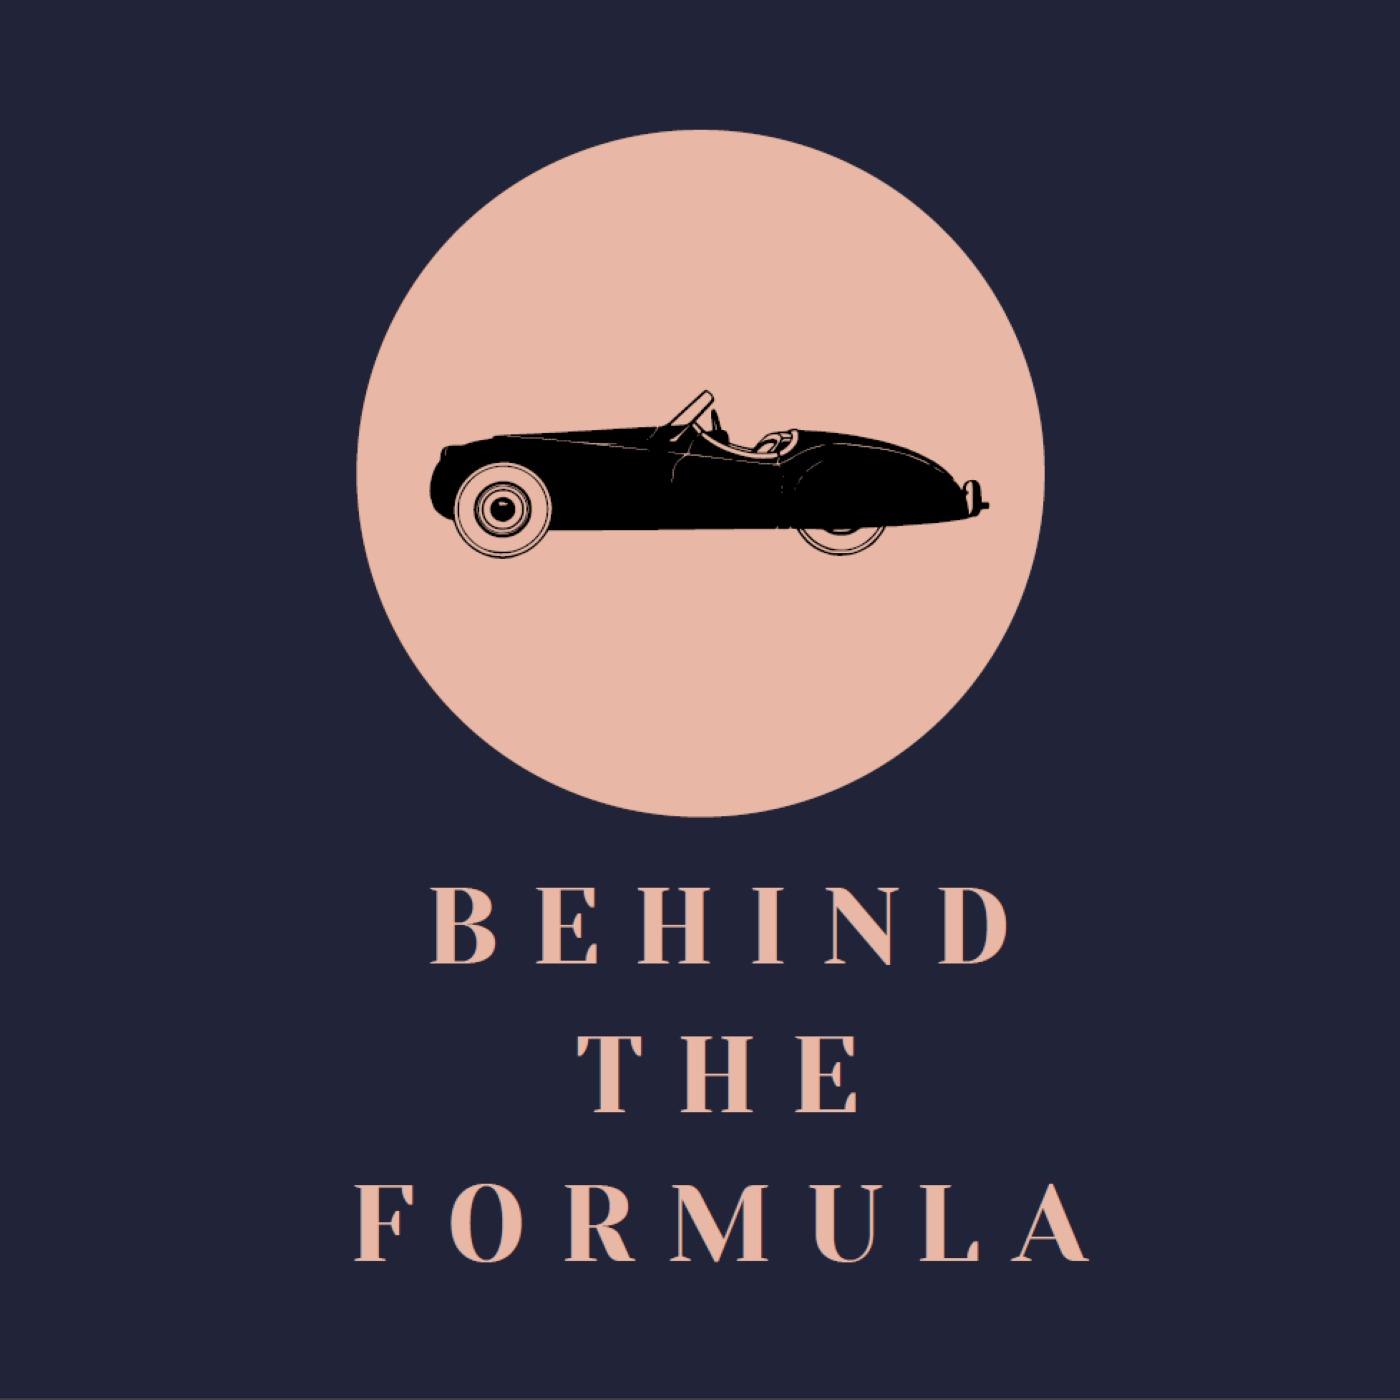 Behind the Formula